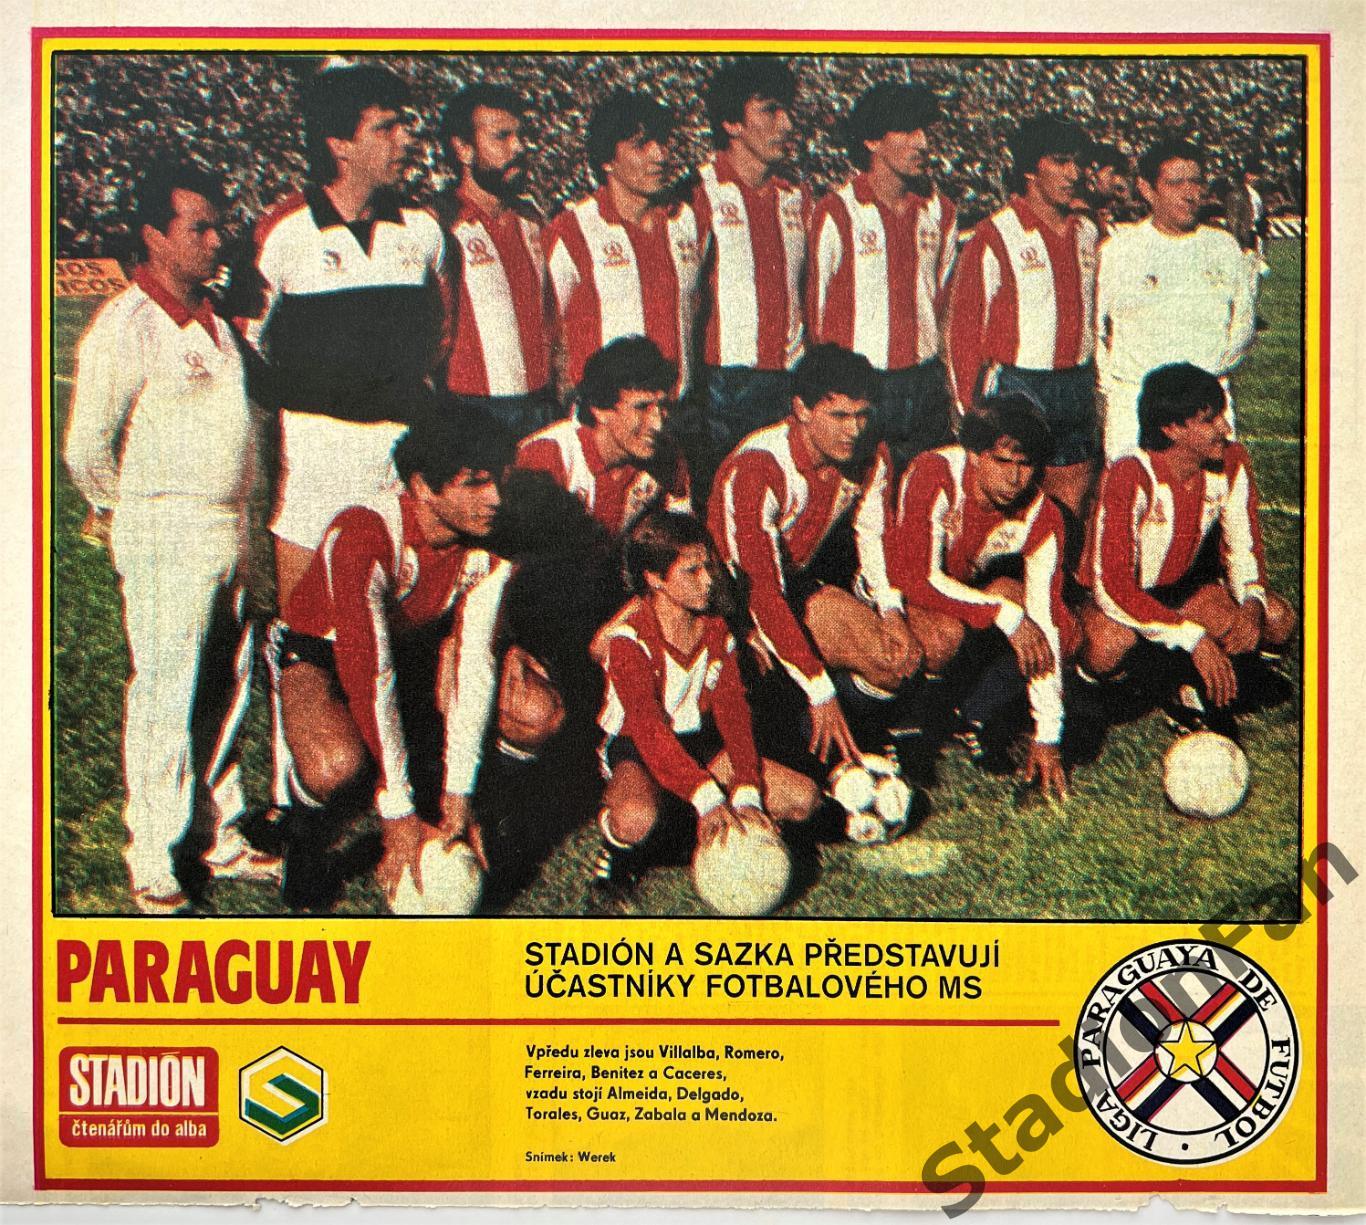 Постер из журнала Stadion - PARAGUAY 1986